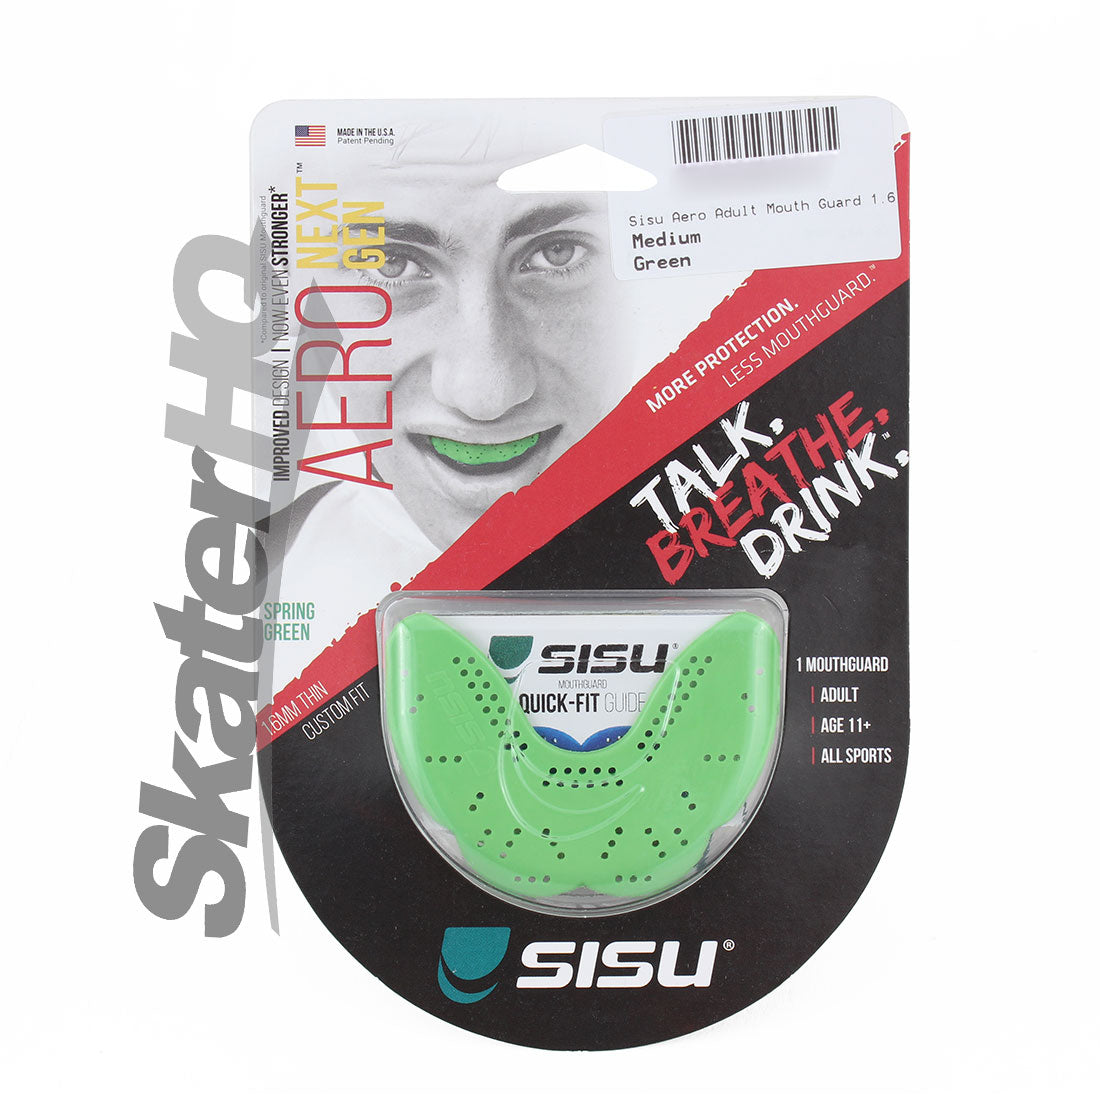 SISU Aero Mouthguard 1.6 Medium - Spring Green Protective Mouthguards